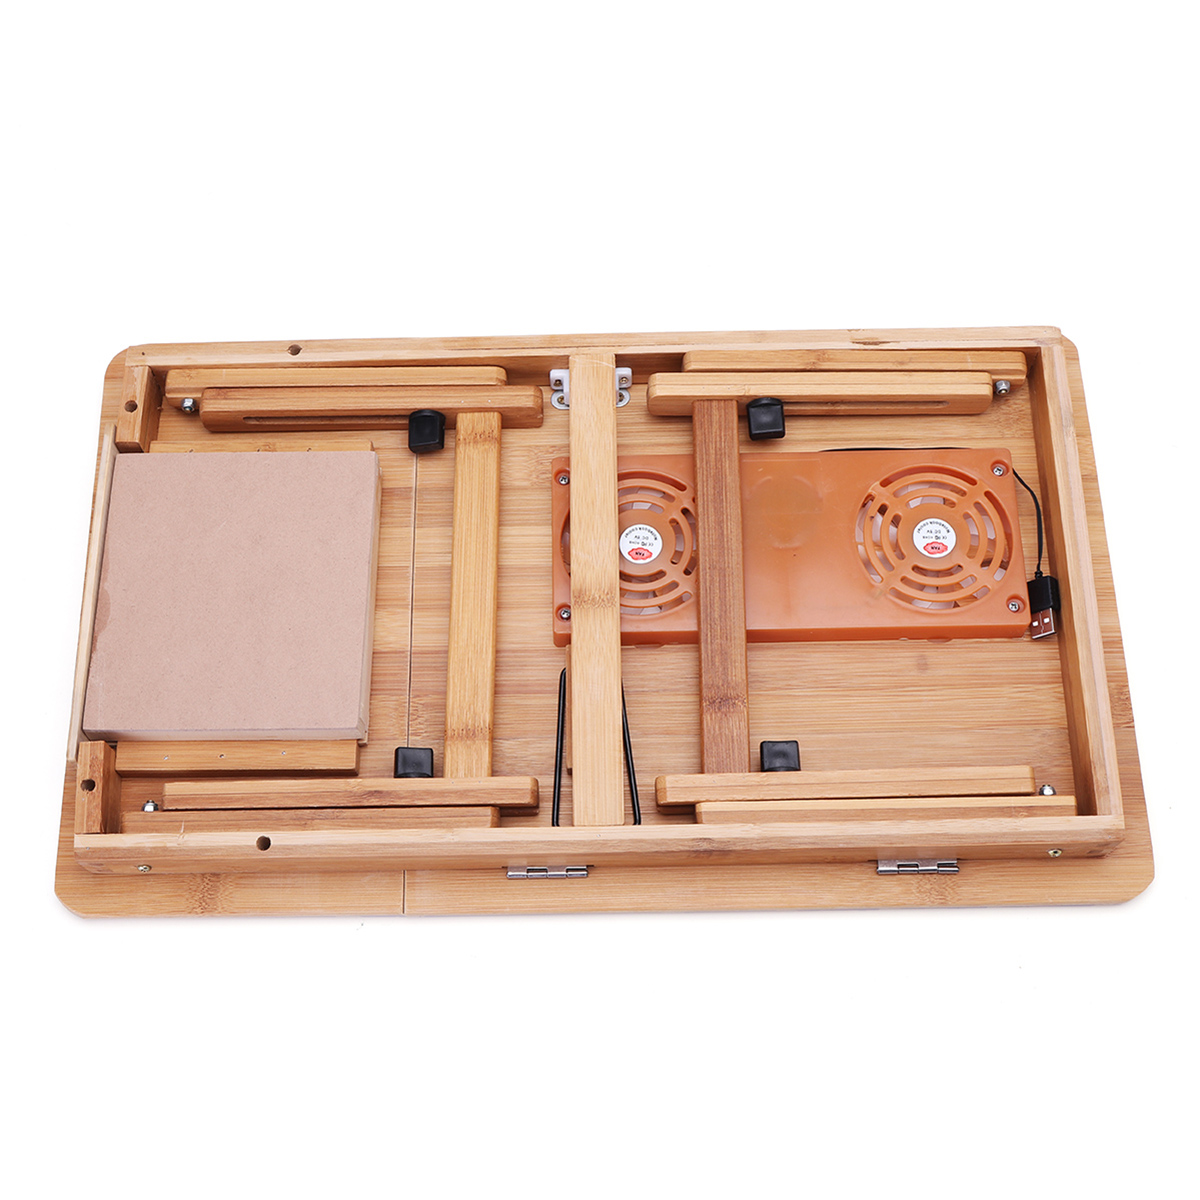 Portable Folding Lap Desk Bamboo Laptop Breakfast Tray Bed Table Stand Fan 8